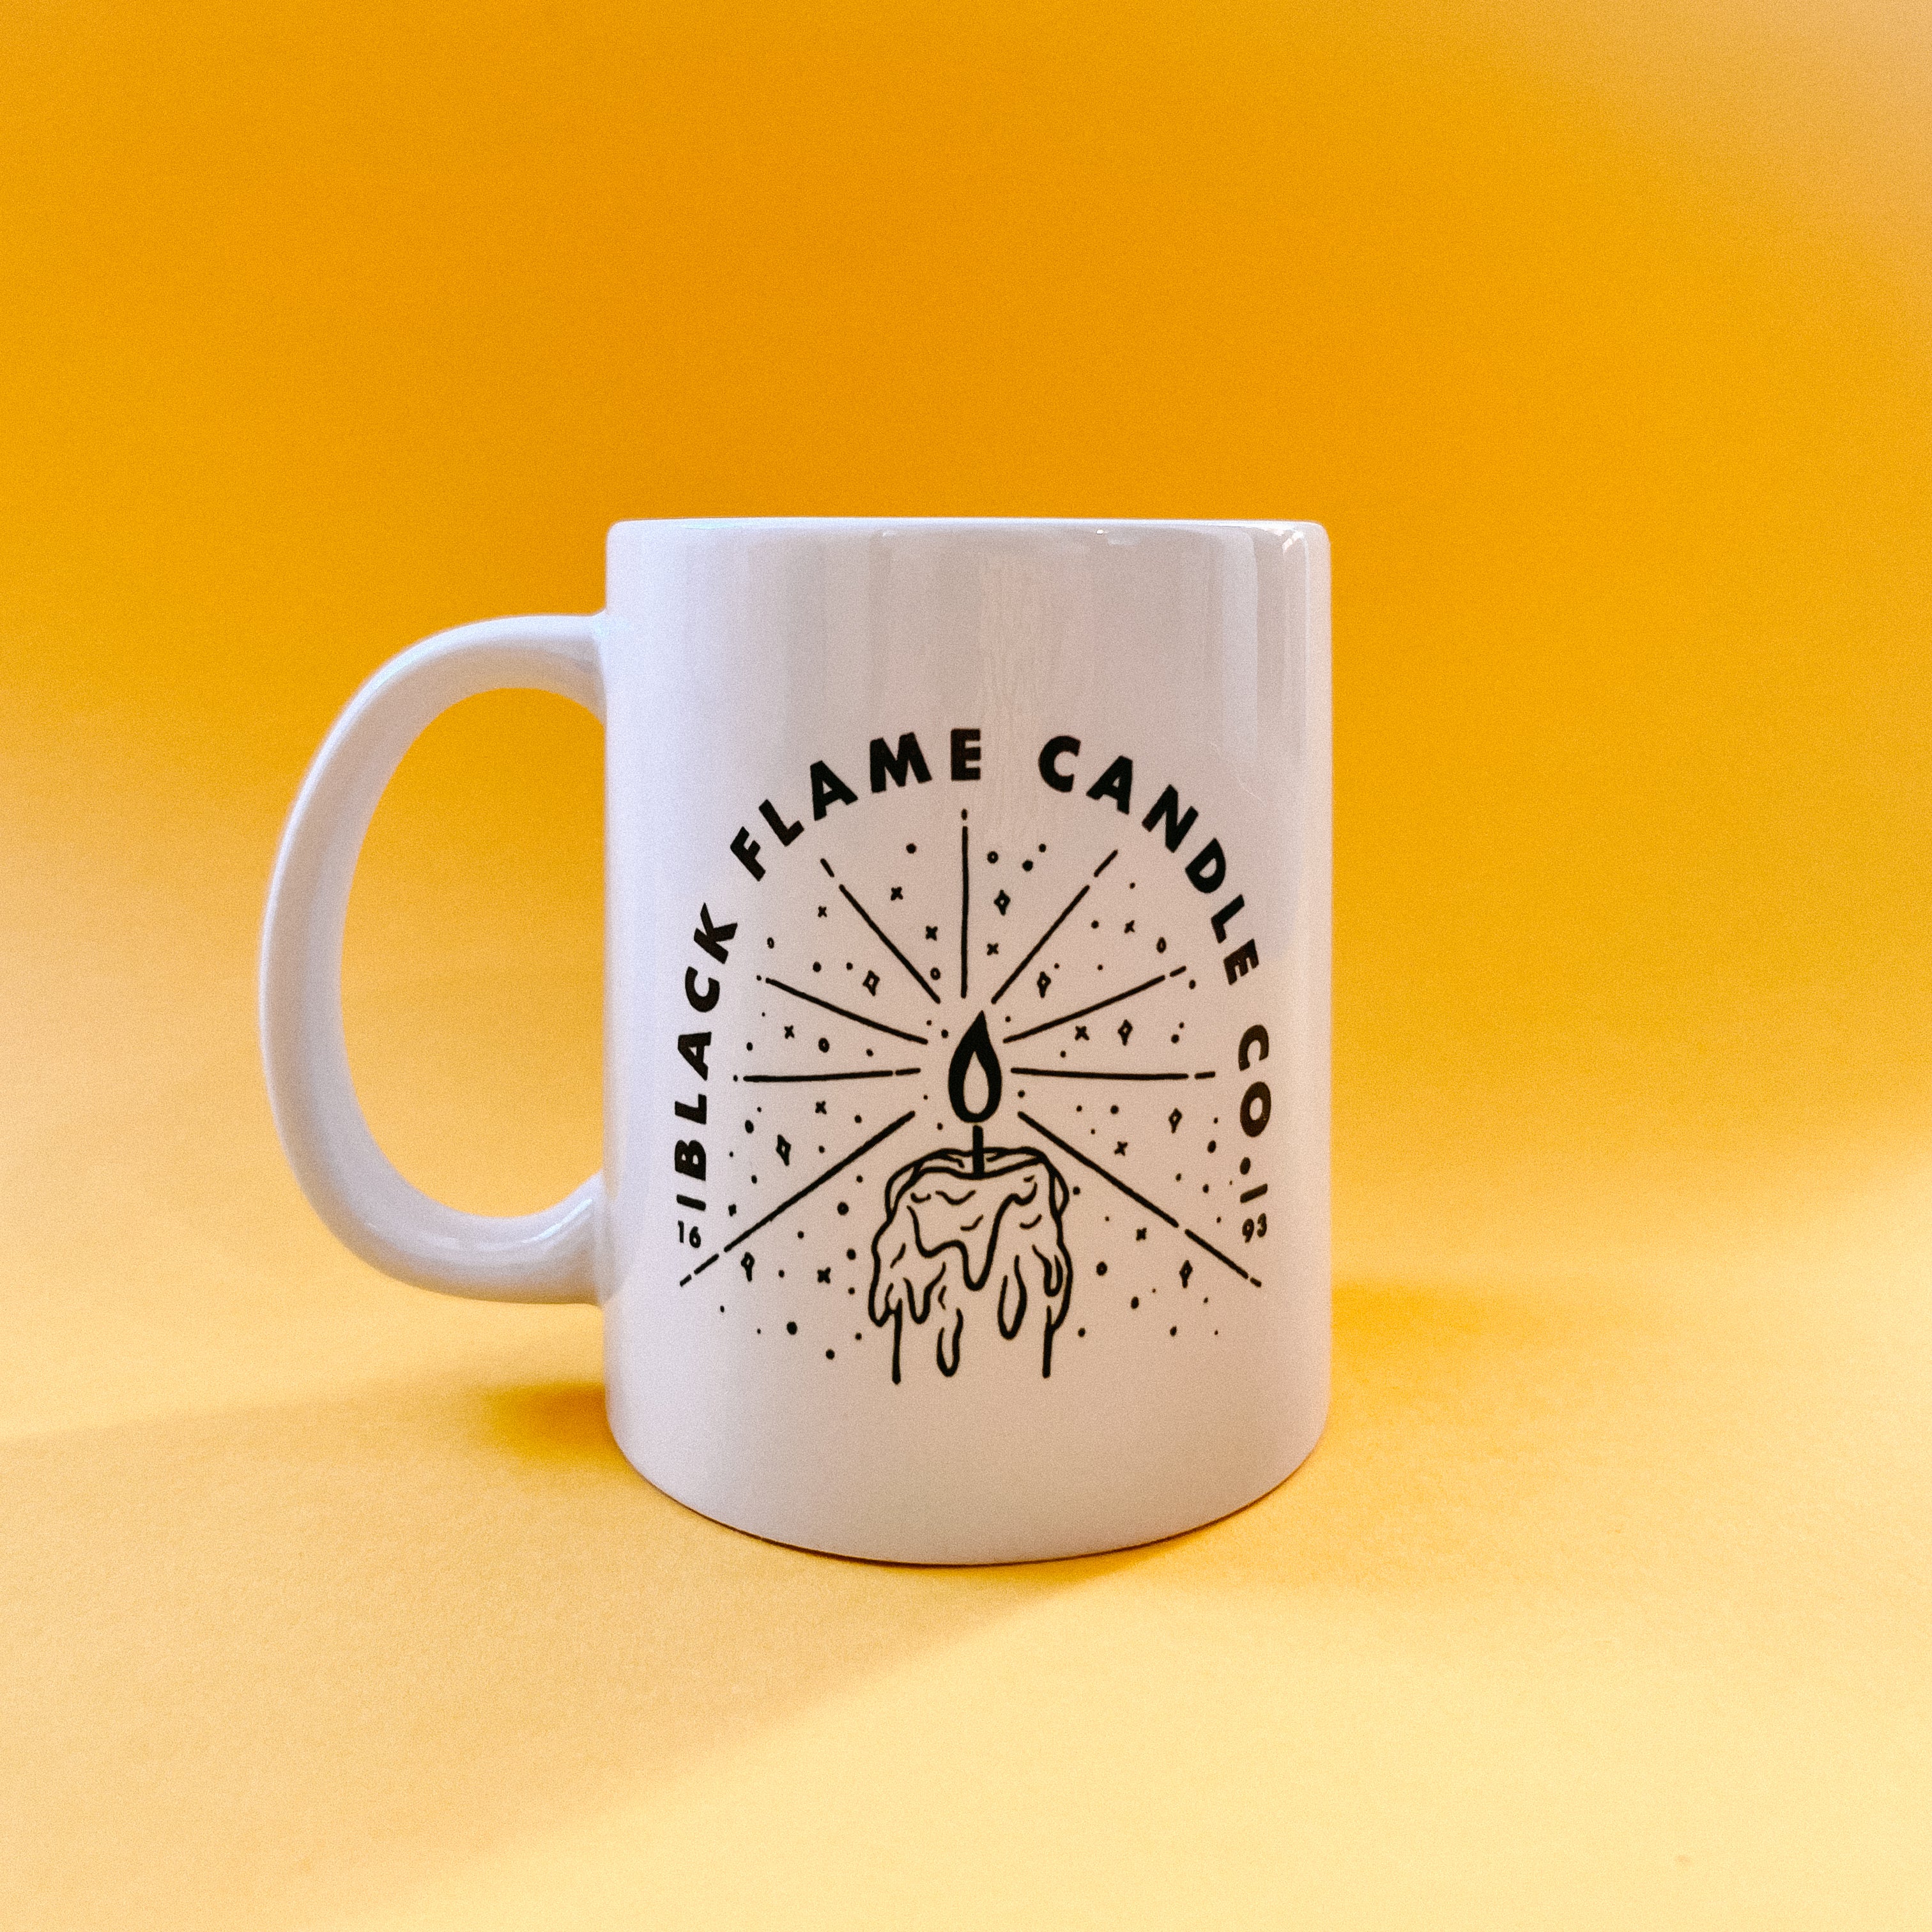 Black Flame Candle Company Mug